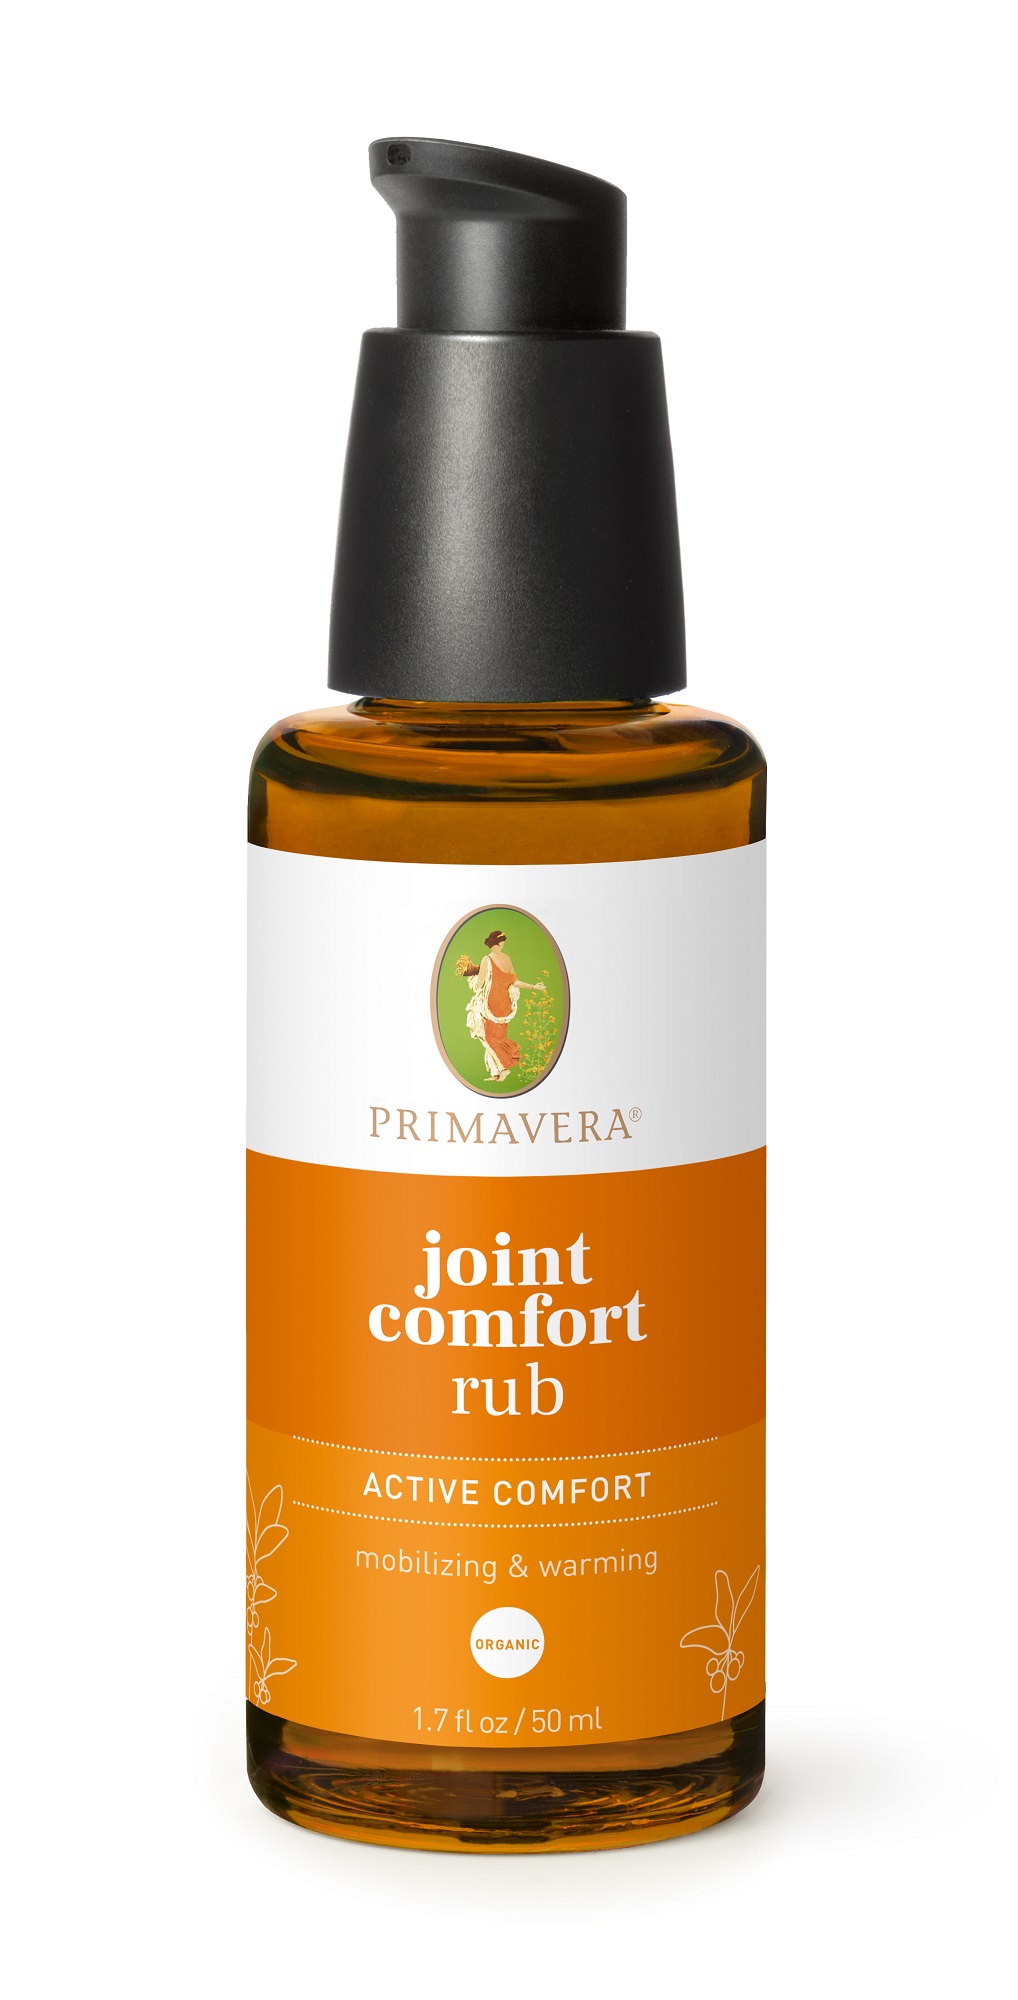 Primavera Masážní olej Active Comfort Joint Comfort Rub 50 ml